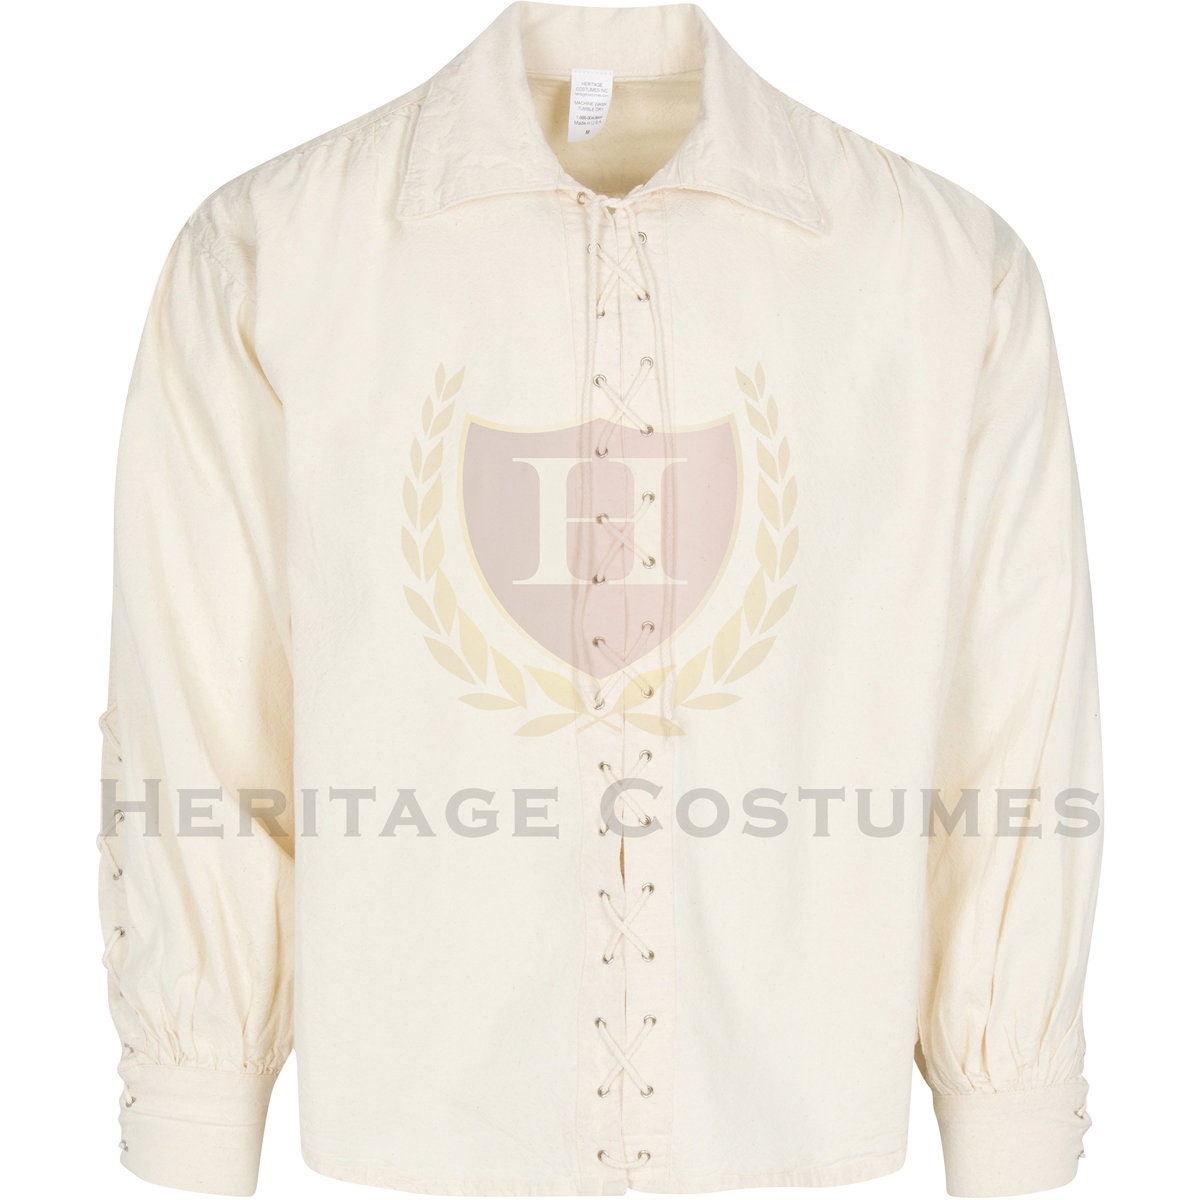 Men's Lace-Up Long Sleeve Renaissance Shirt, Pirate Shirt